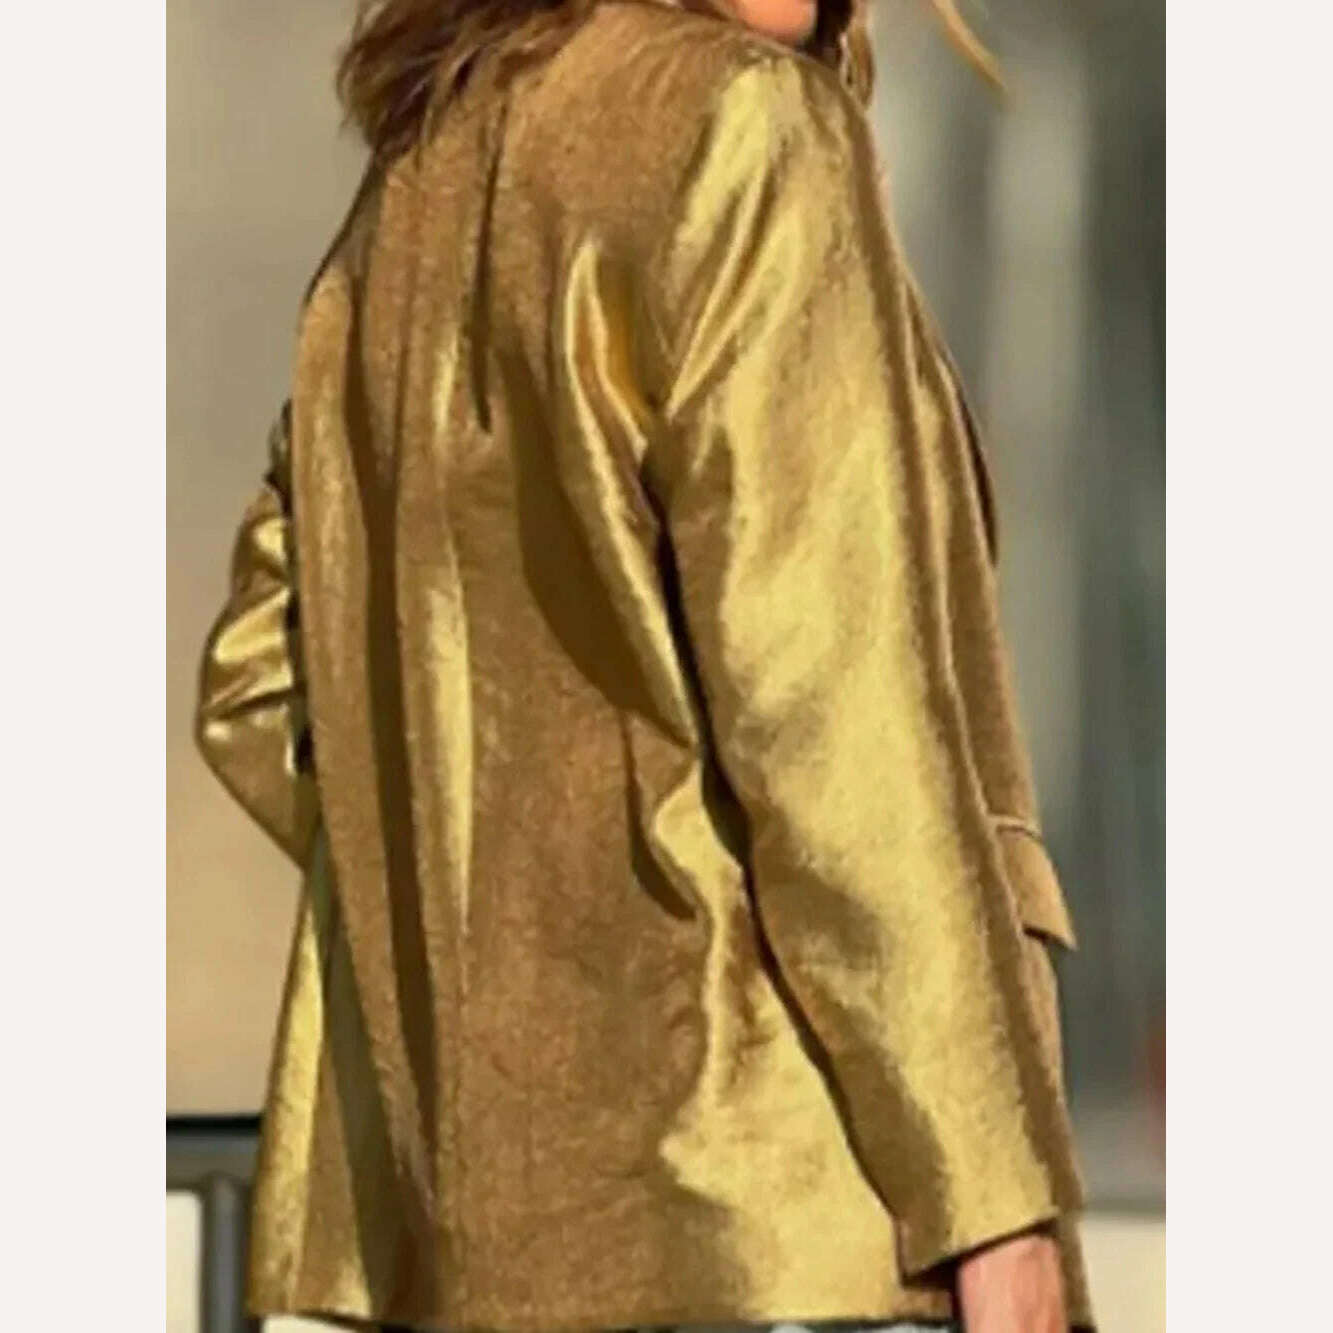 KIMLUD, Gold Loose Blazer Jacket for Women Lapel Collar Jackets Spring Autumn Long Sleeve V Neck Coat Streetwear Lady Elegant Outerwear, KIMLUD Women's Clothes